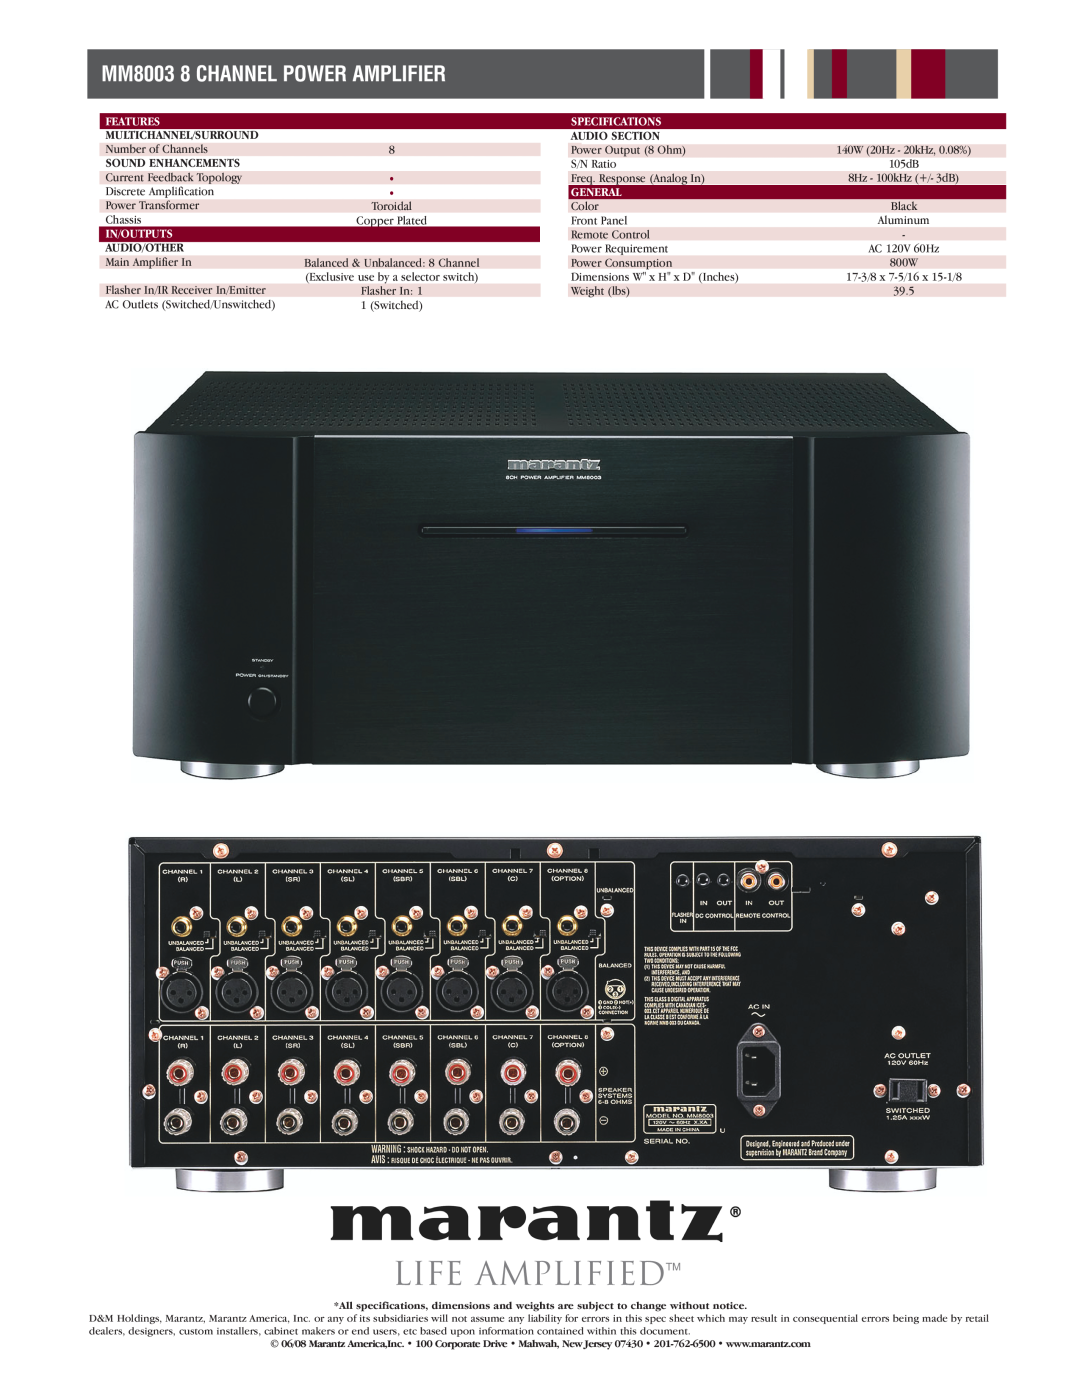 Marantz AV8003 manual MM8003 8 CHANNEL POWER AMPLIFIER, Life Amplifiedtm, Features, Specifications, Multichannel/Surround 